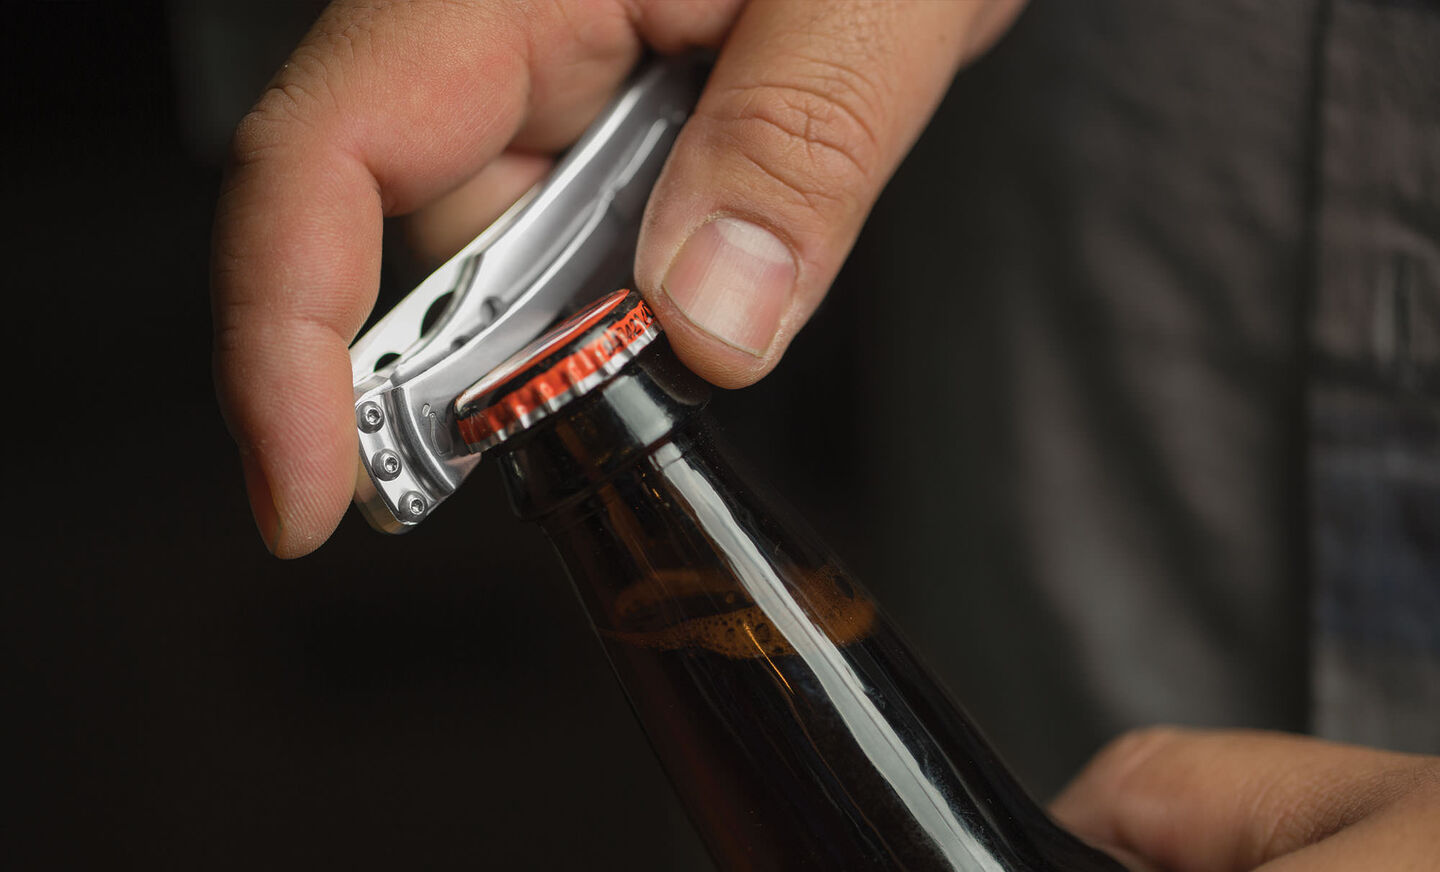 Using the Leatherman kbx pocket clip bottle opener